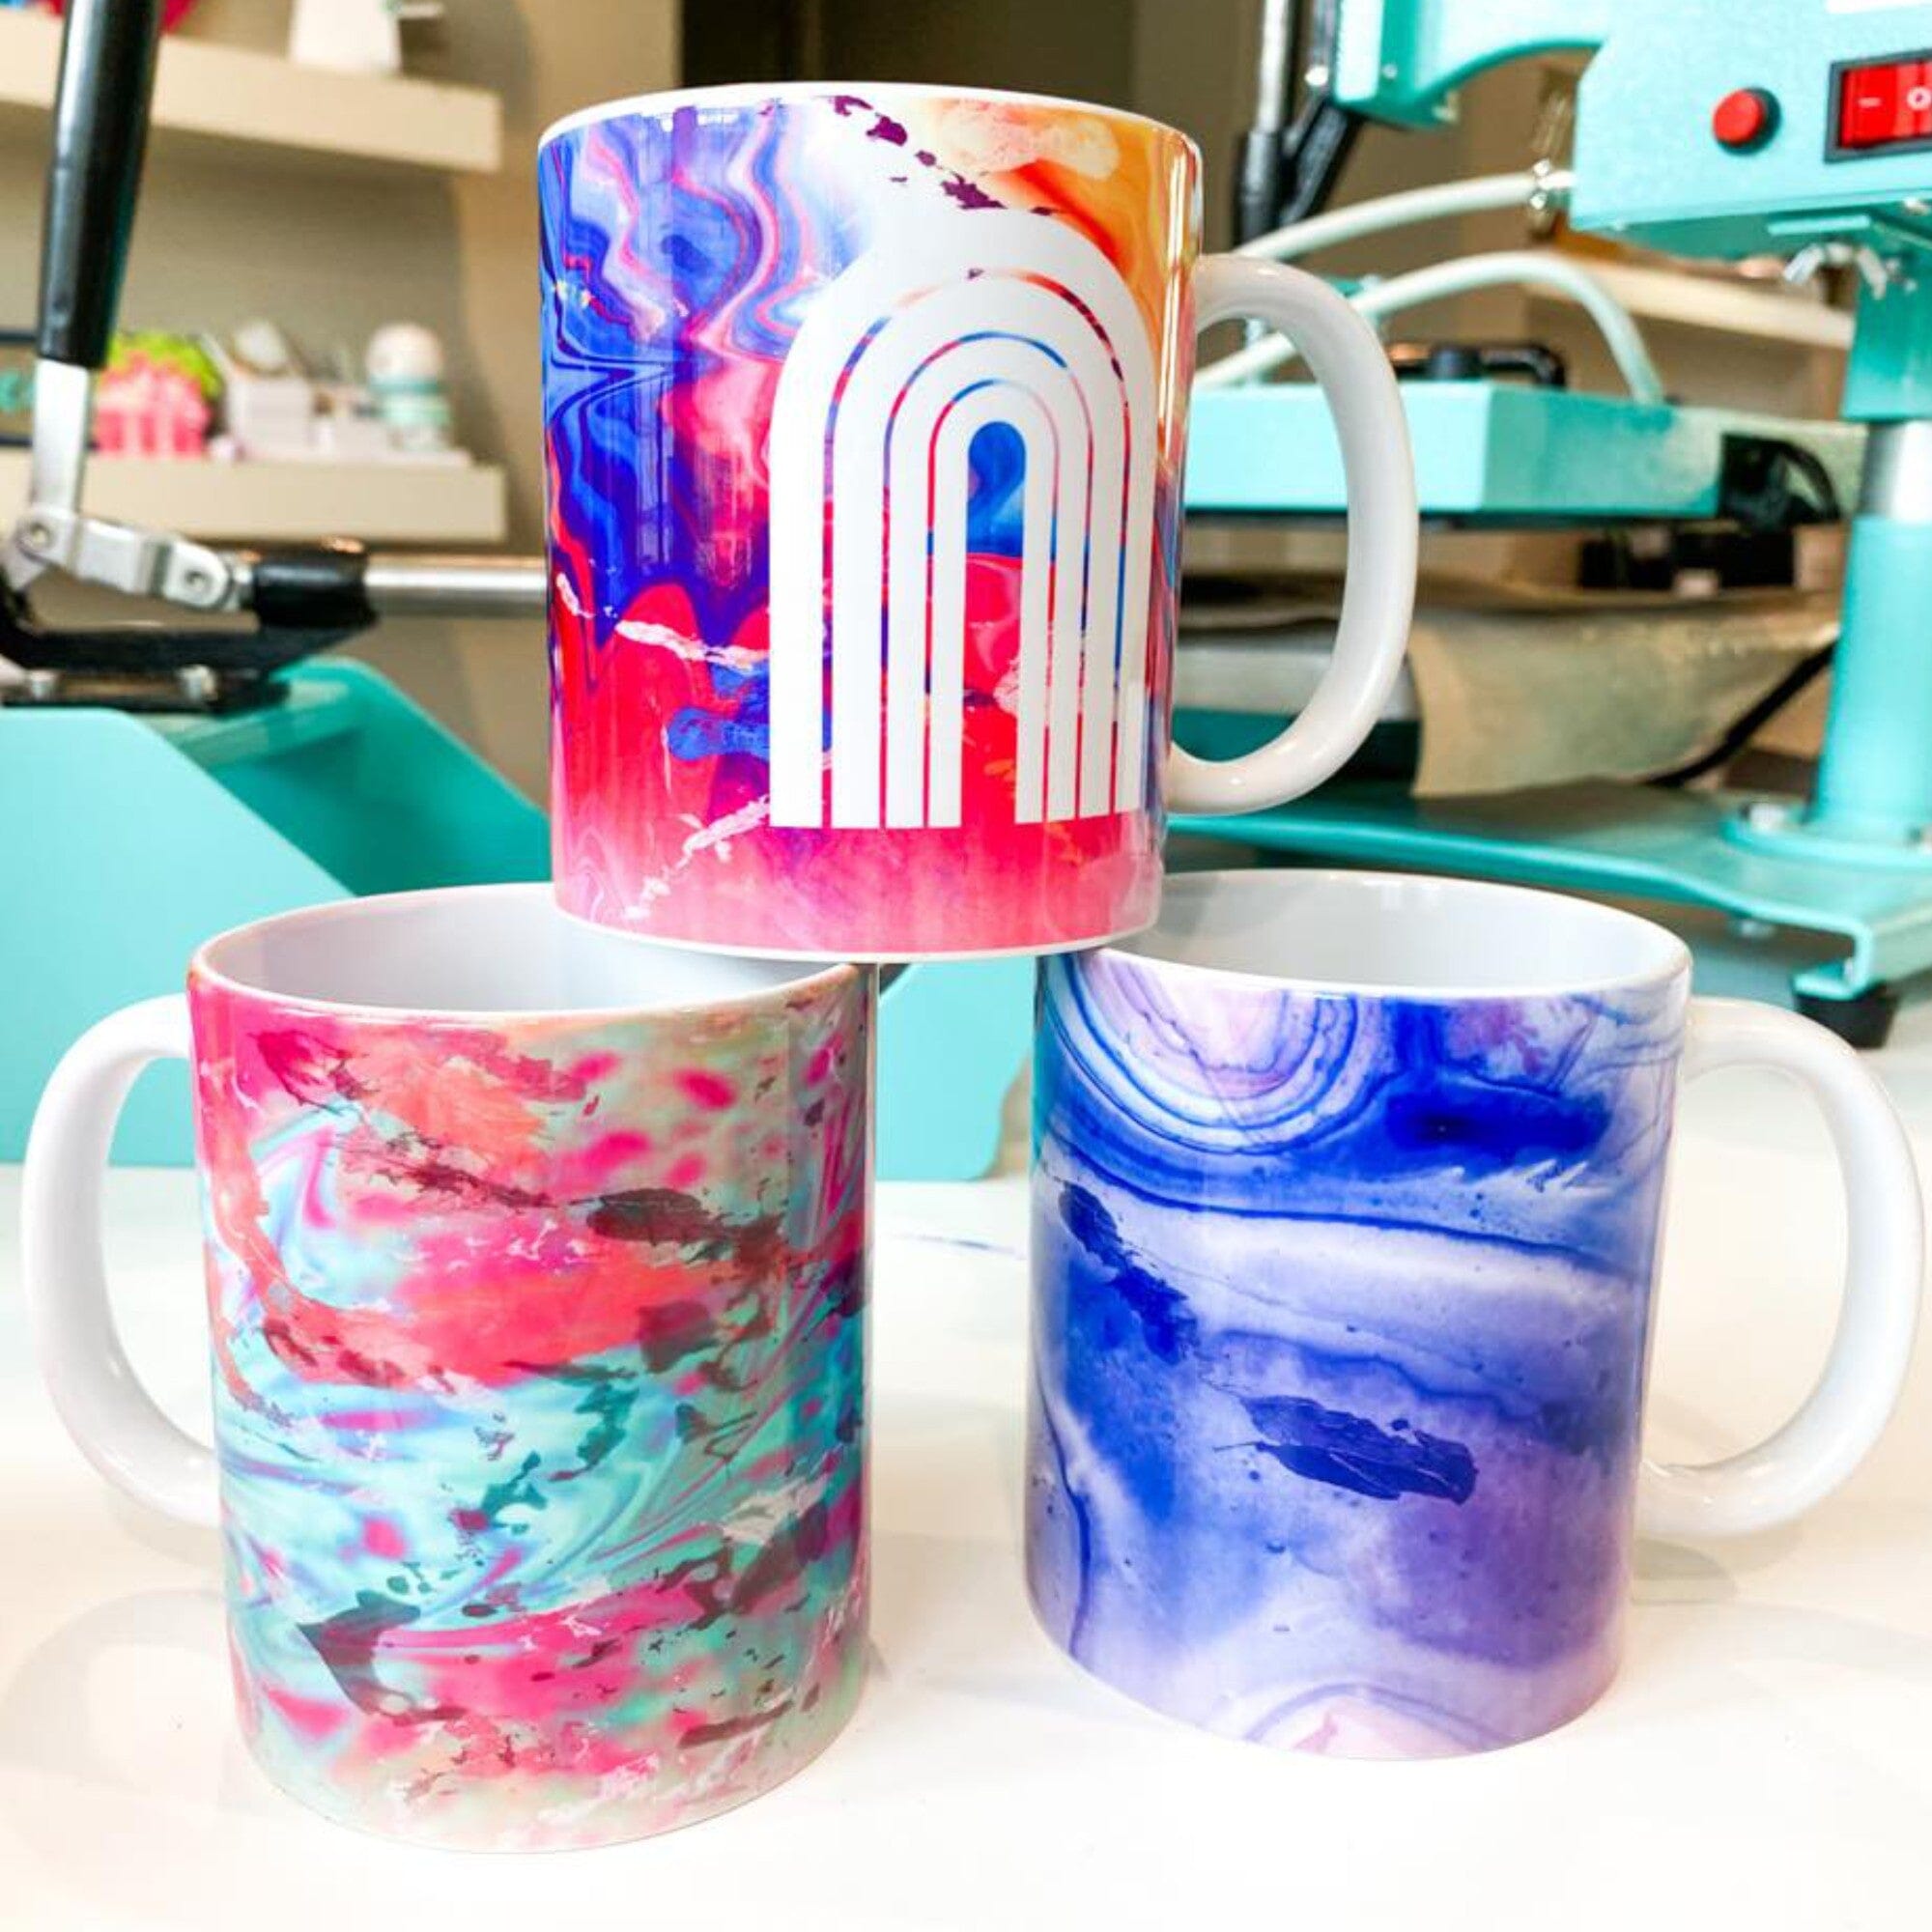 Lot 12 Colored Porcelain Crumpled Design Cups 60ml